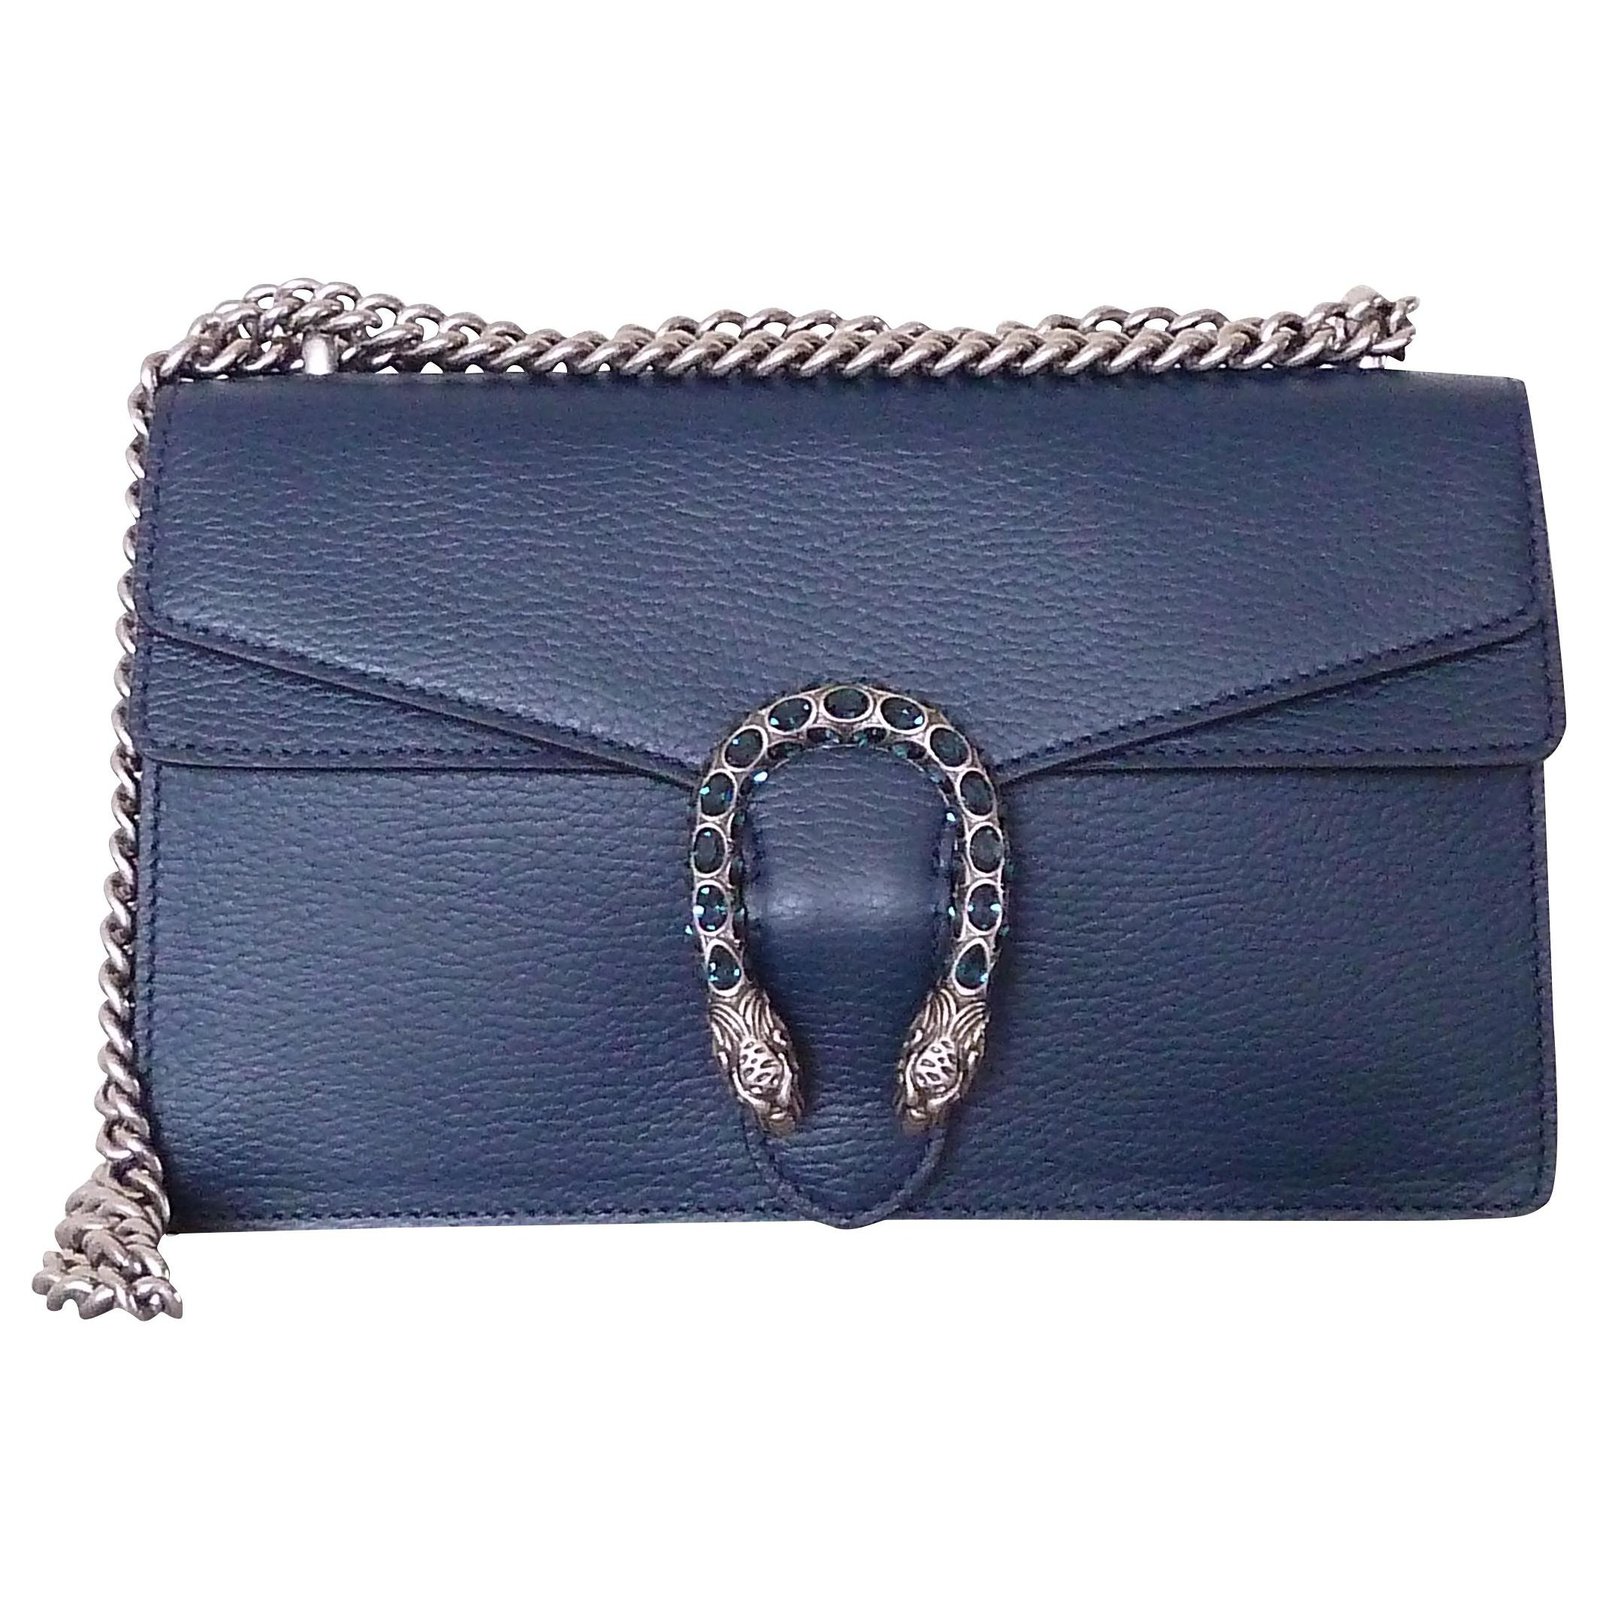 Gucci GUCCI Dionysus bag blue leather 